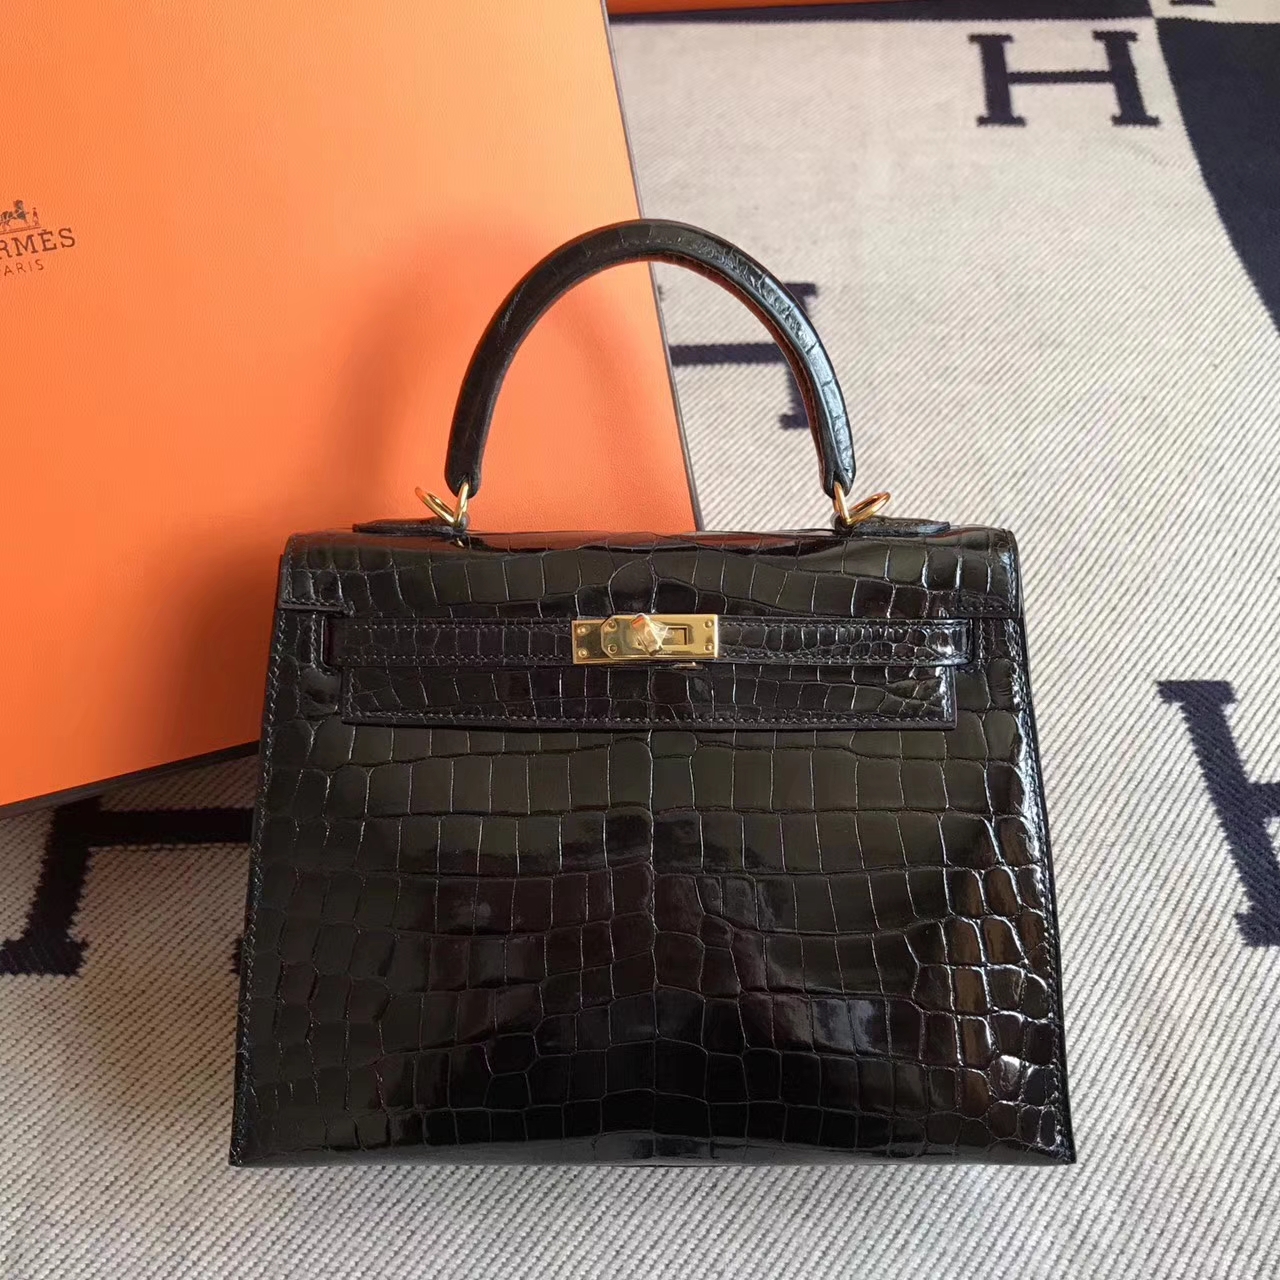 Discount Hermes Kelly Bag25cm in CK89 Black Crocodile Shiny Leather